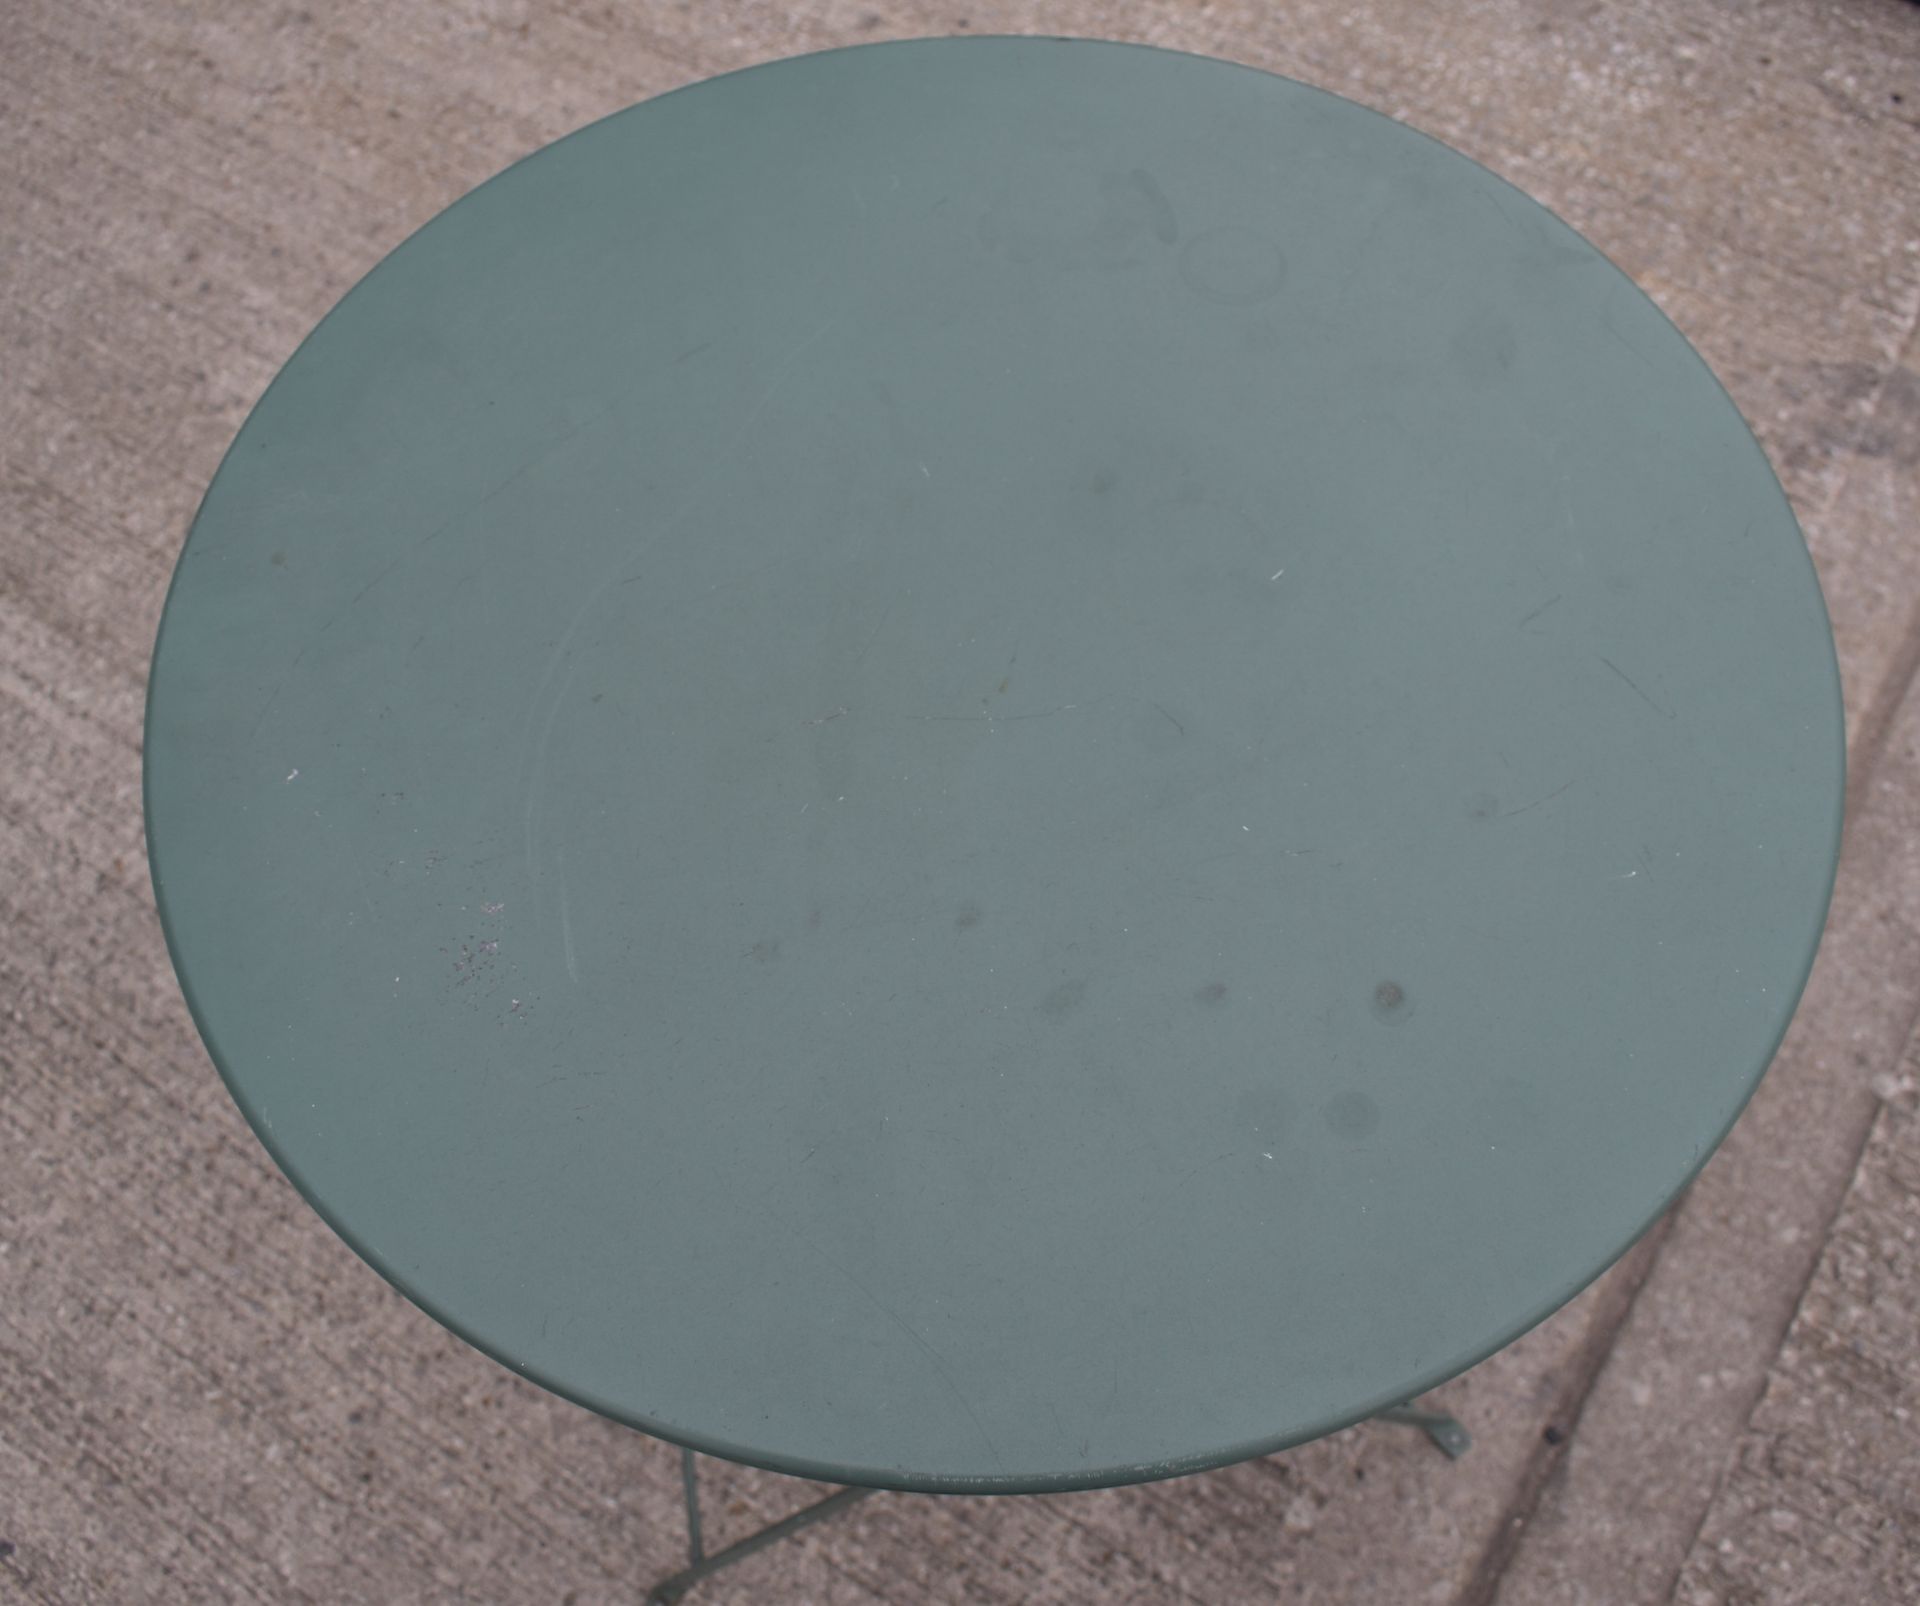 1 x Round Foldaway Green Metal Garden Table - 60 (D) x 71 (H) cms - Ref: K235 - CL905 - Location: Al - Image 4 of 10